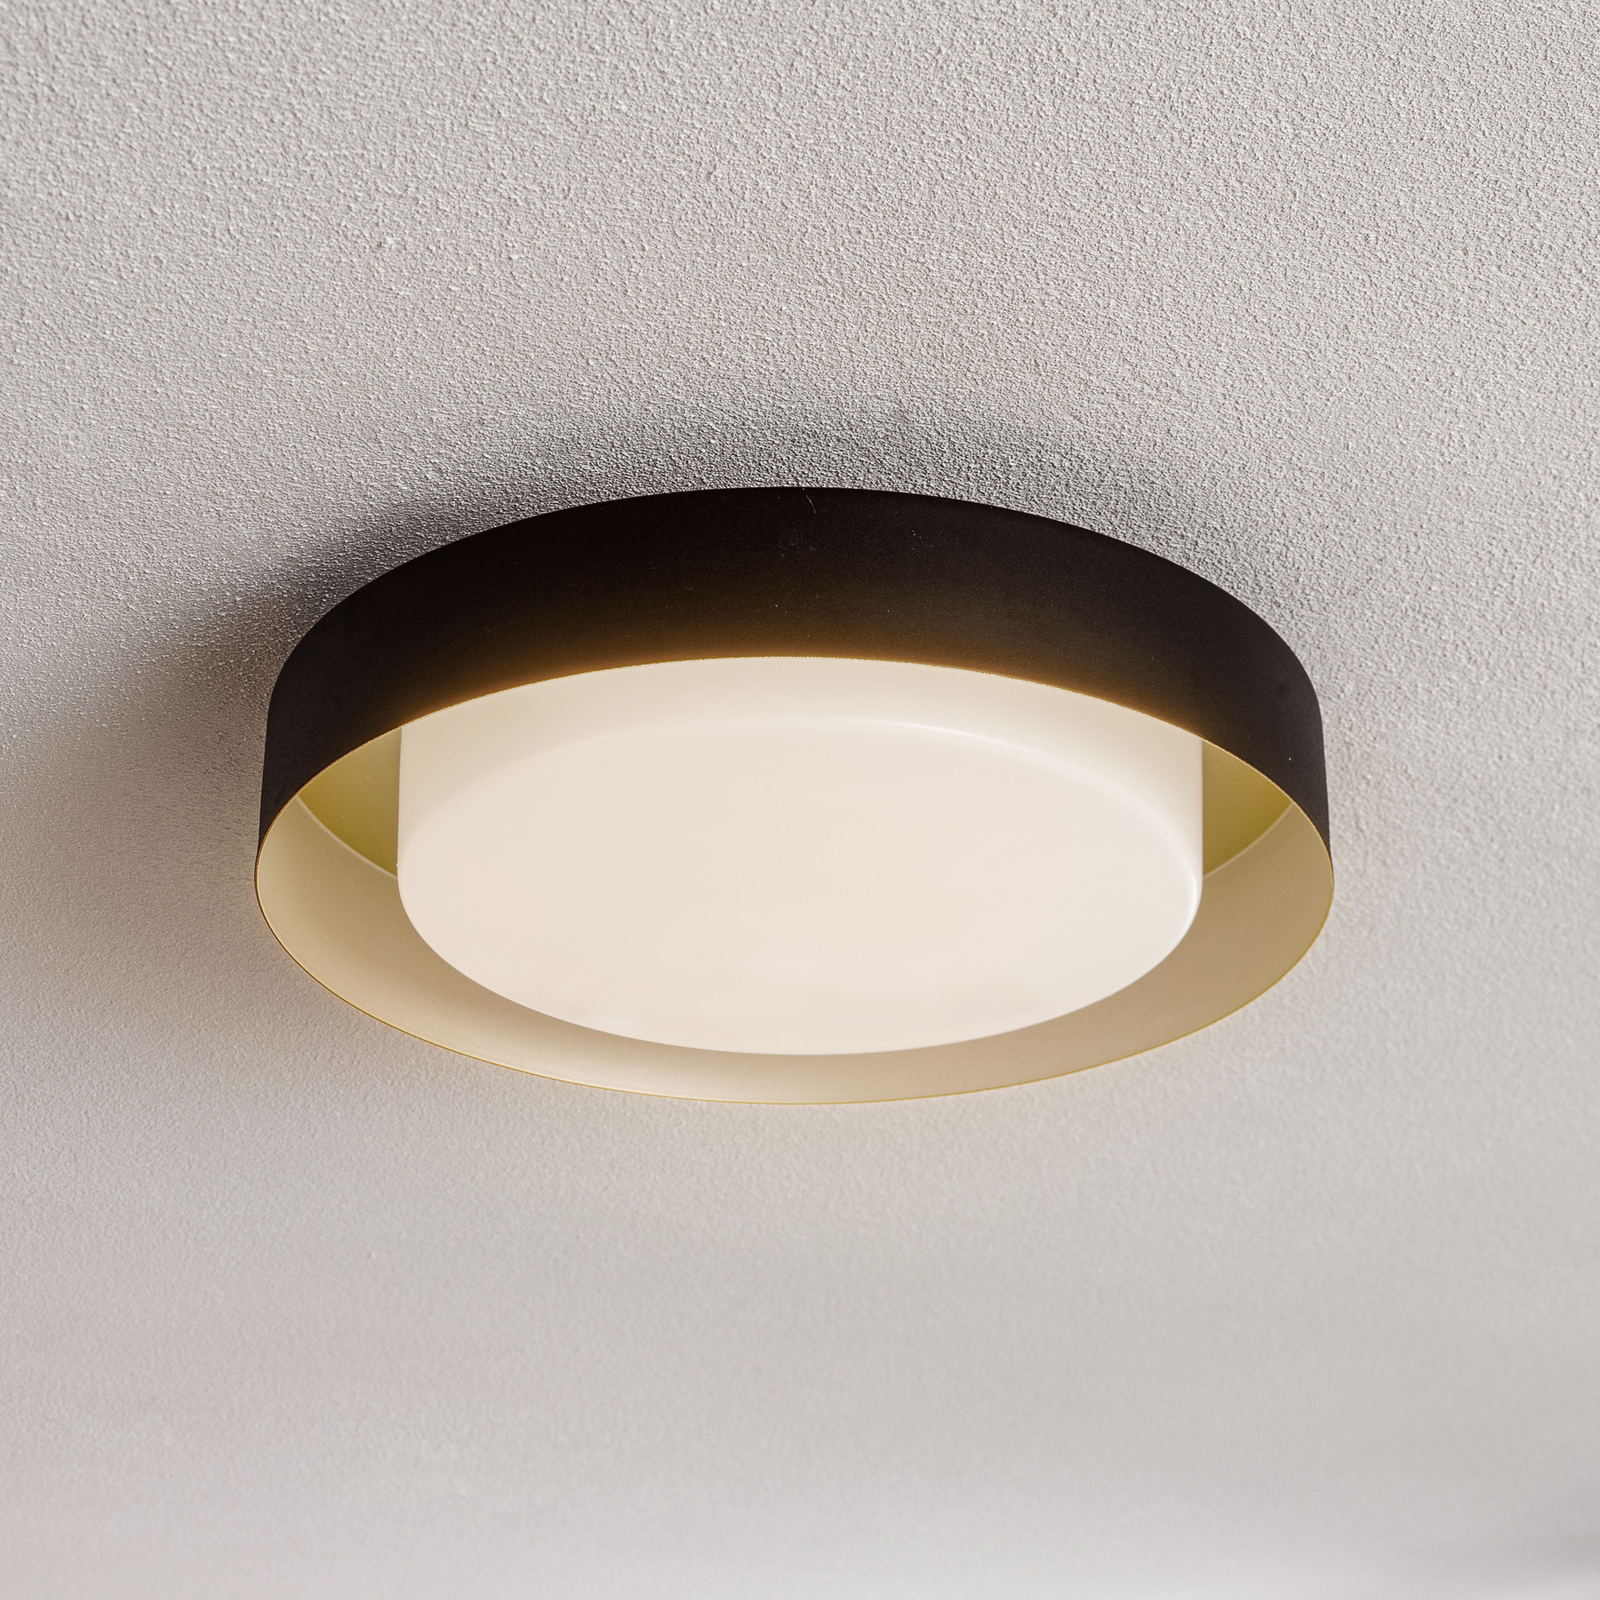 Arcchio Damaria lampa sufitowa LED, czarno-złota